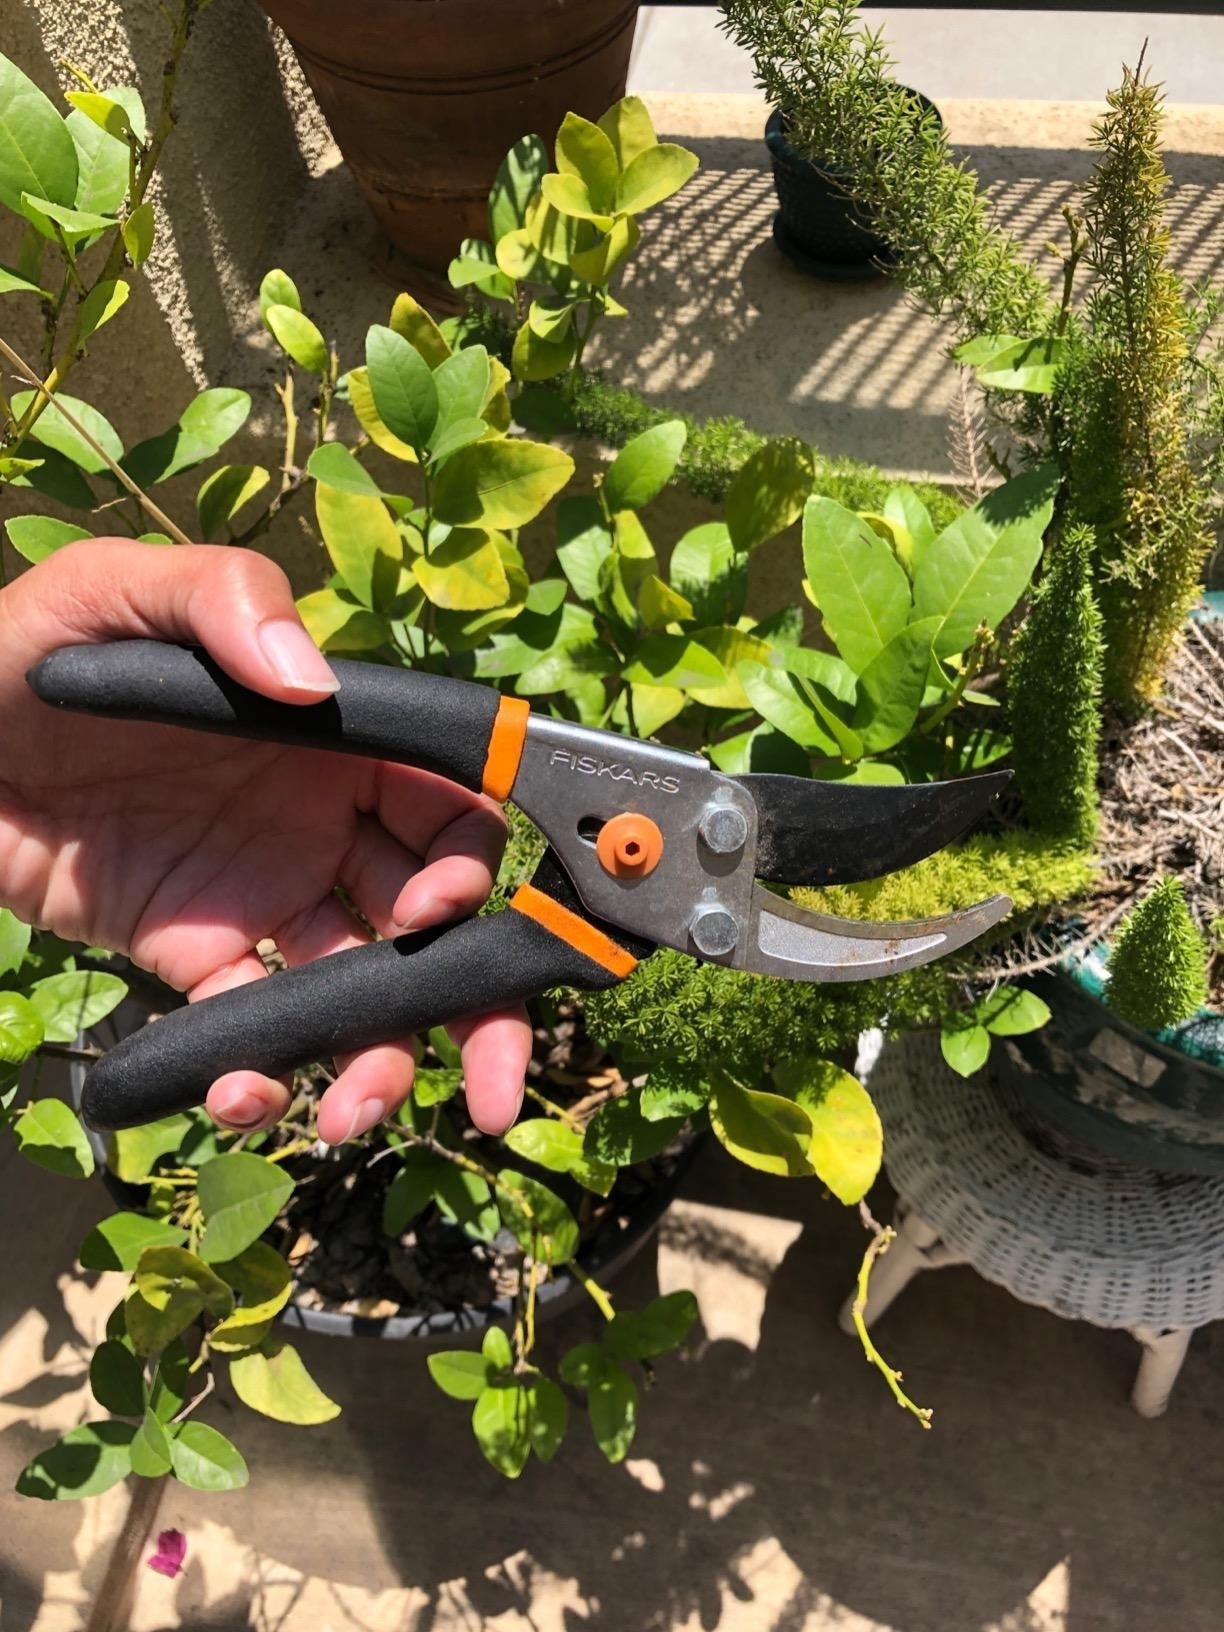 Hand holding Fiskars pruning shears near a plant for gardening work